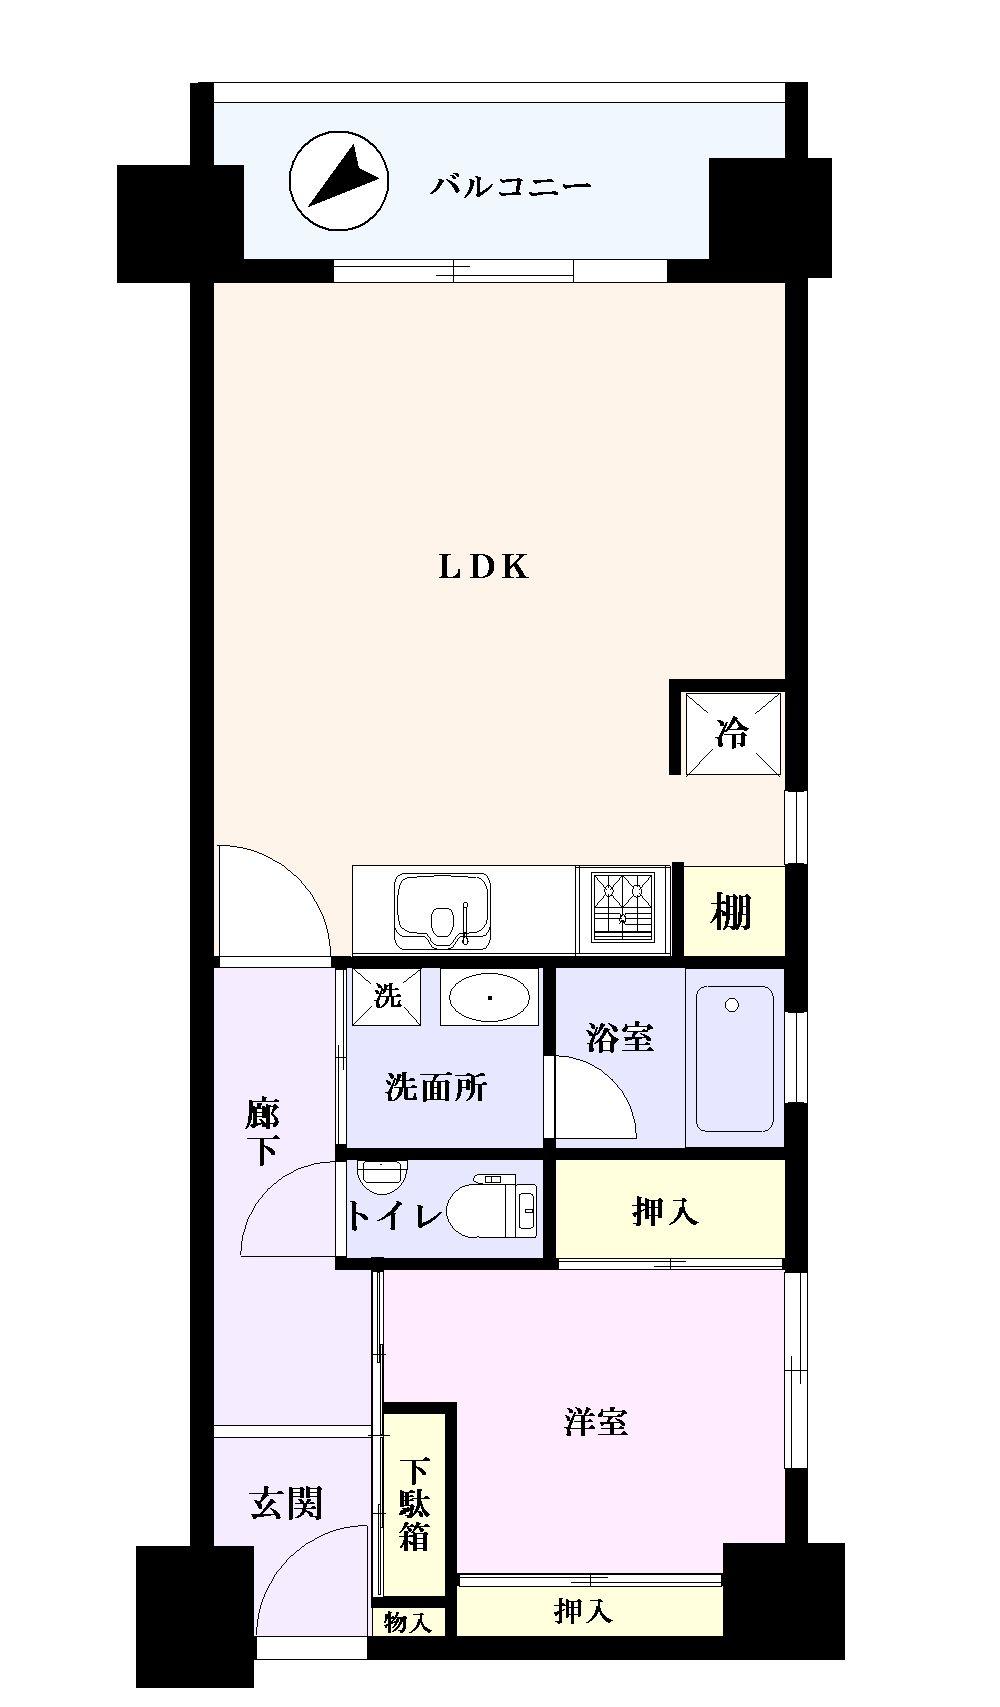 Floor plan. 1LDK, Price 23.8 million yen, Occupied area 48.82 sq m , Balcony area 6.72 sq m